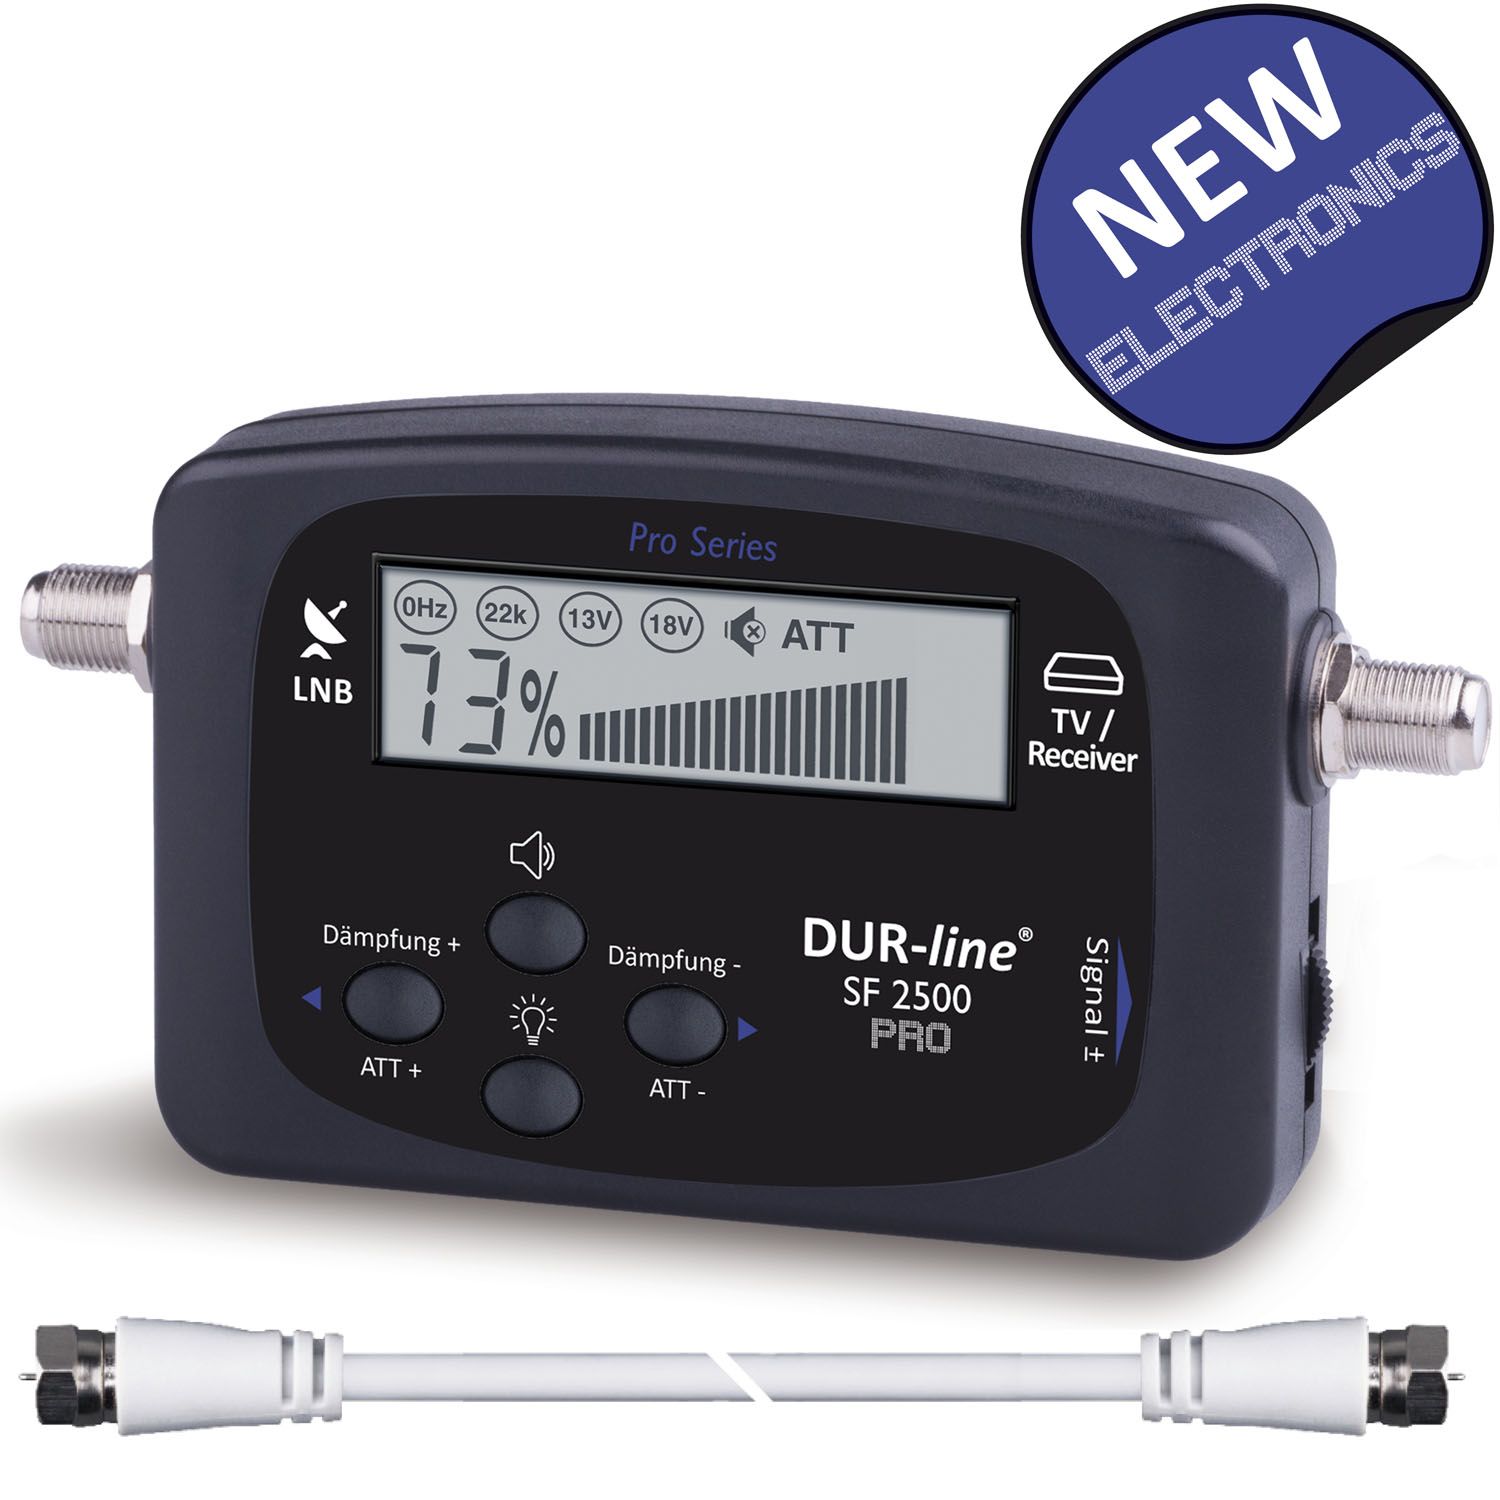 DUR-line SF 2500 Pro - Satfinder Digitales Messgerät